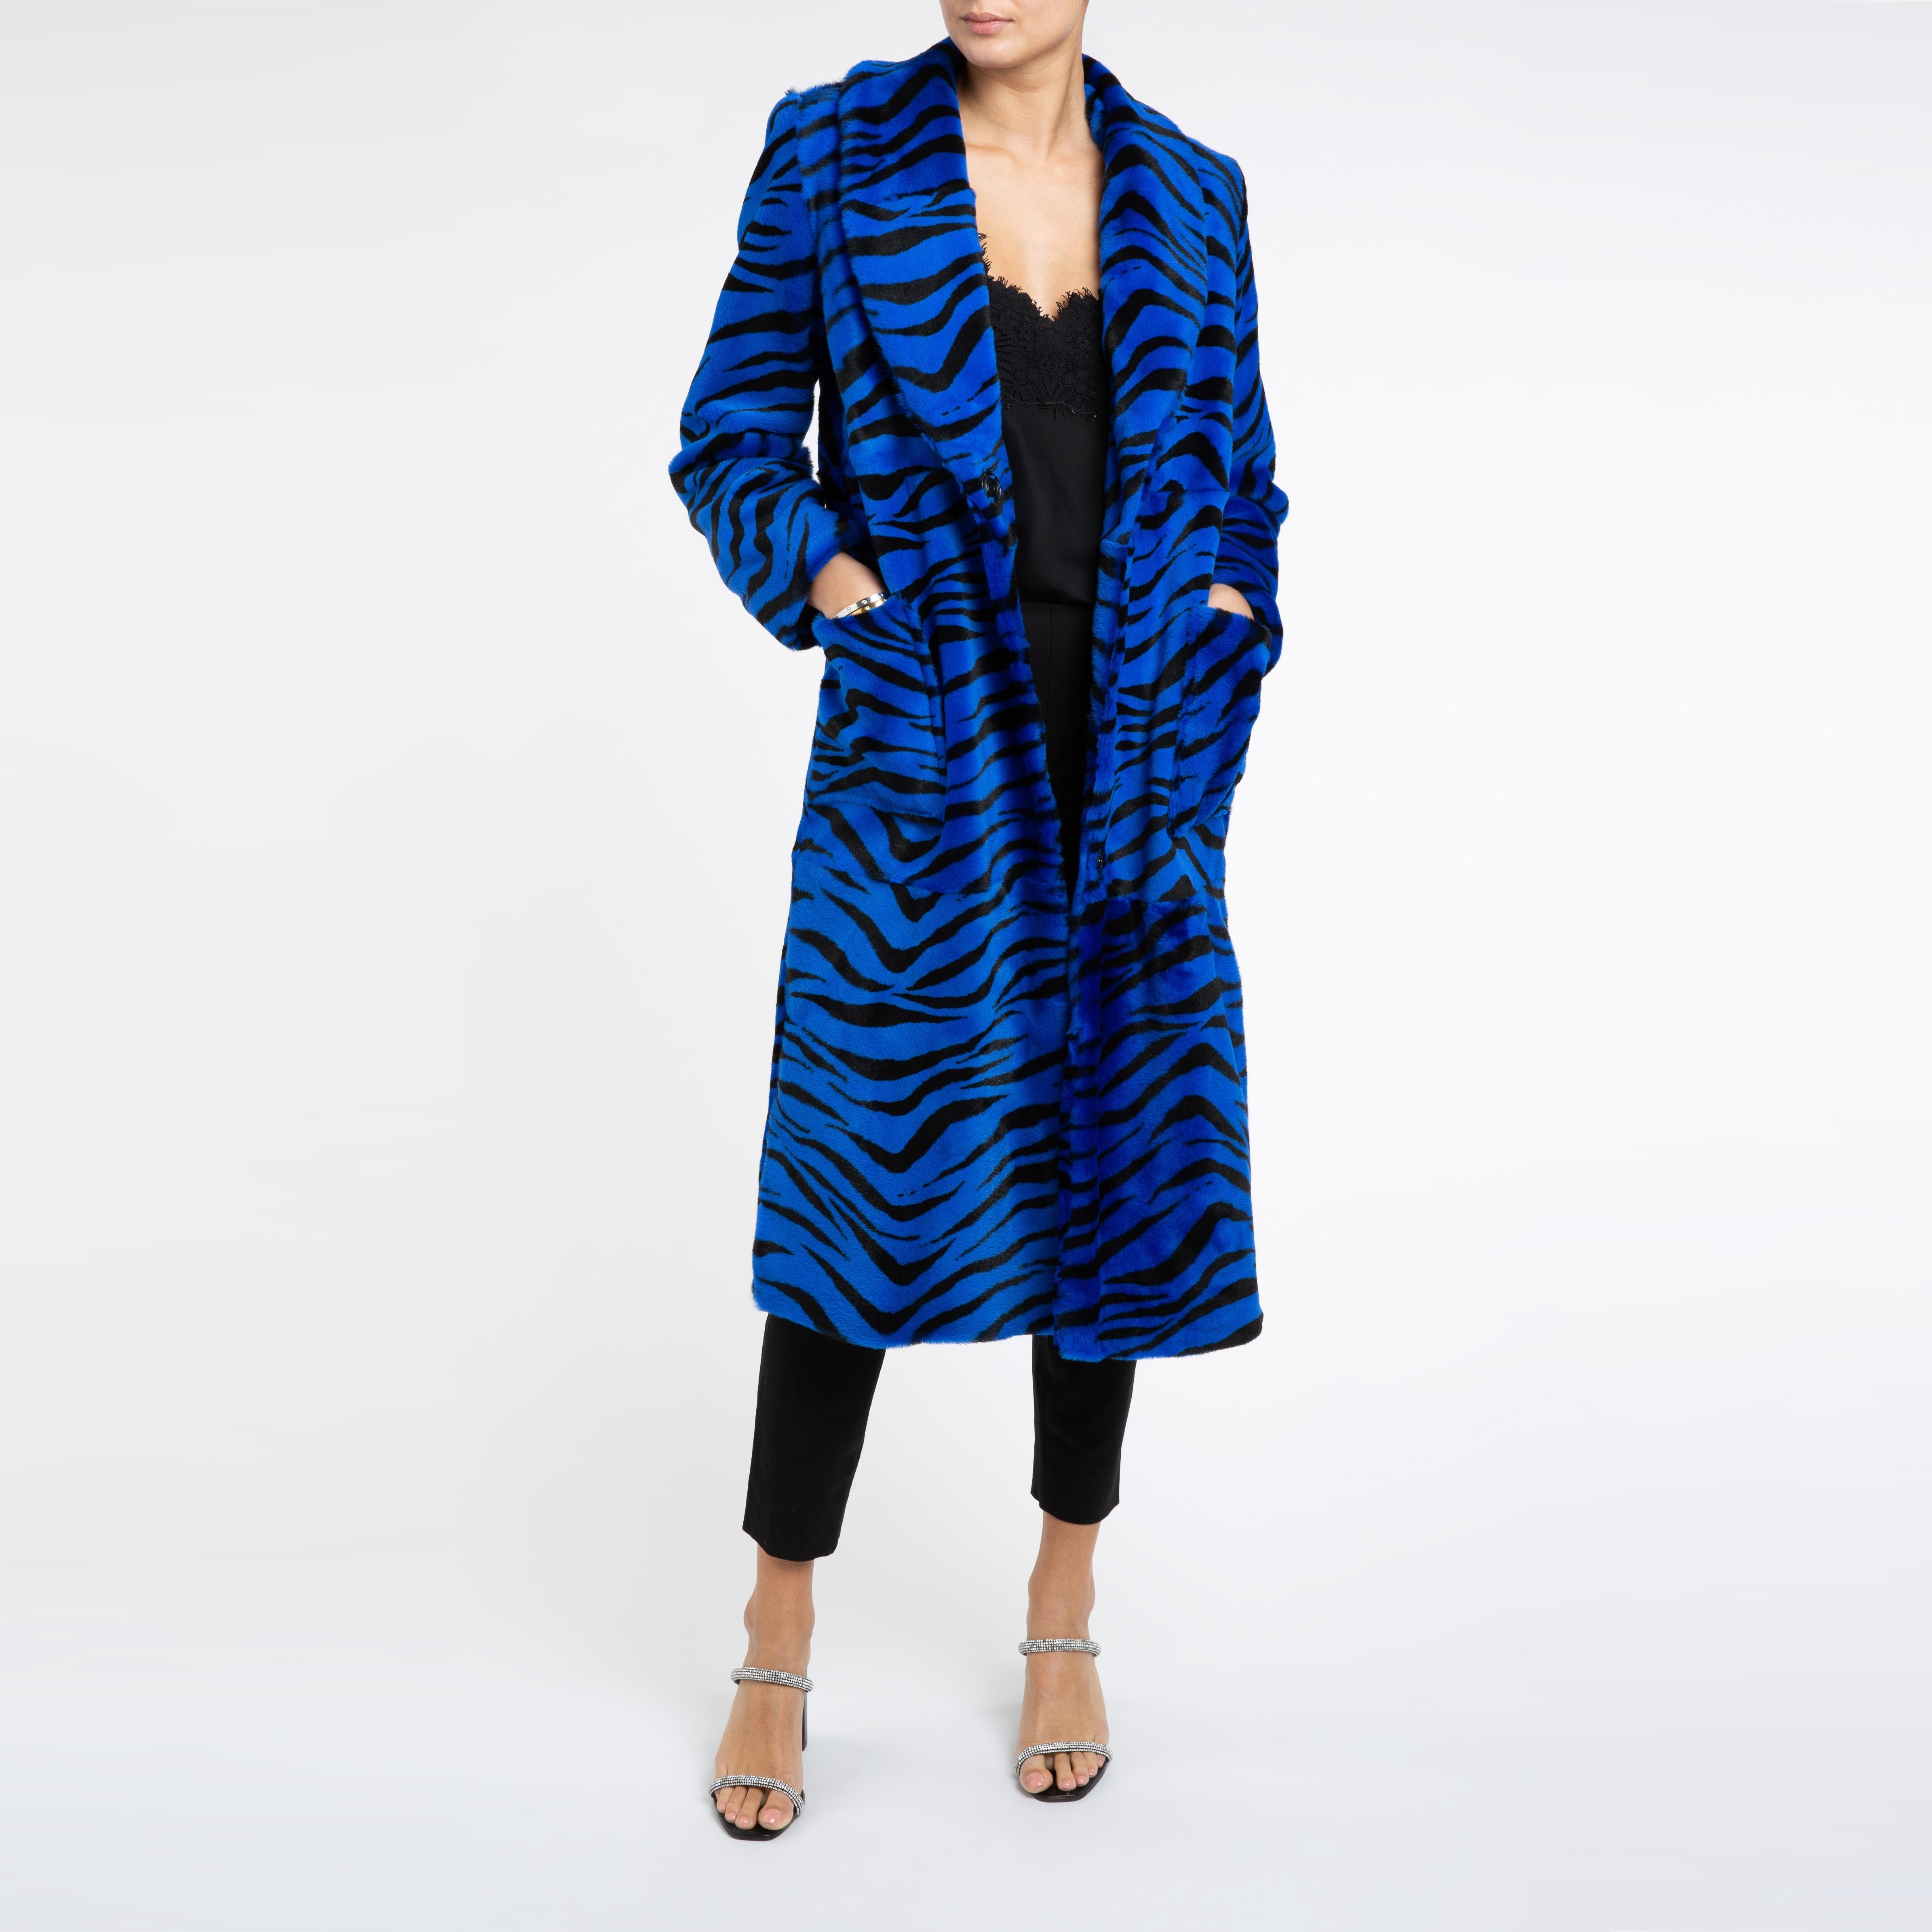 Verheyen London Shearling Coat in Blue Zebra Print size uk 8-10 For Sale 8